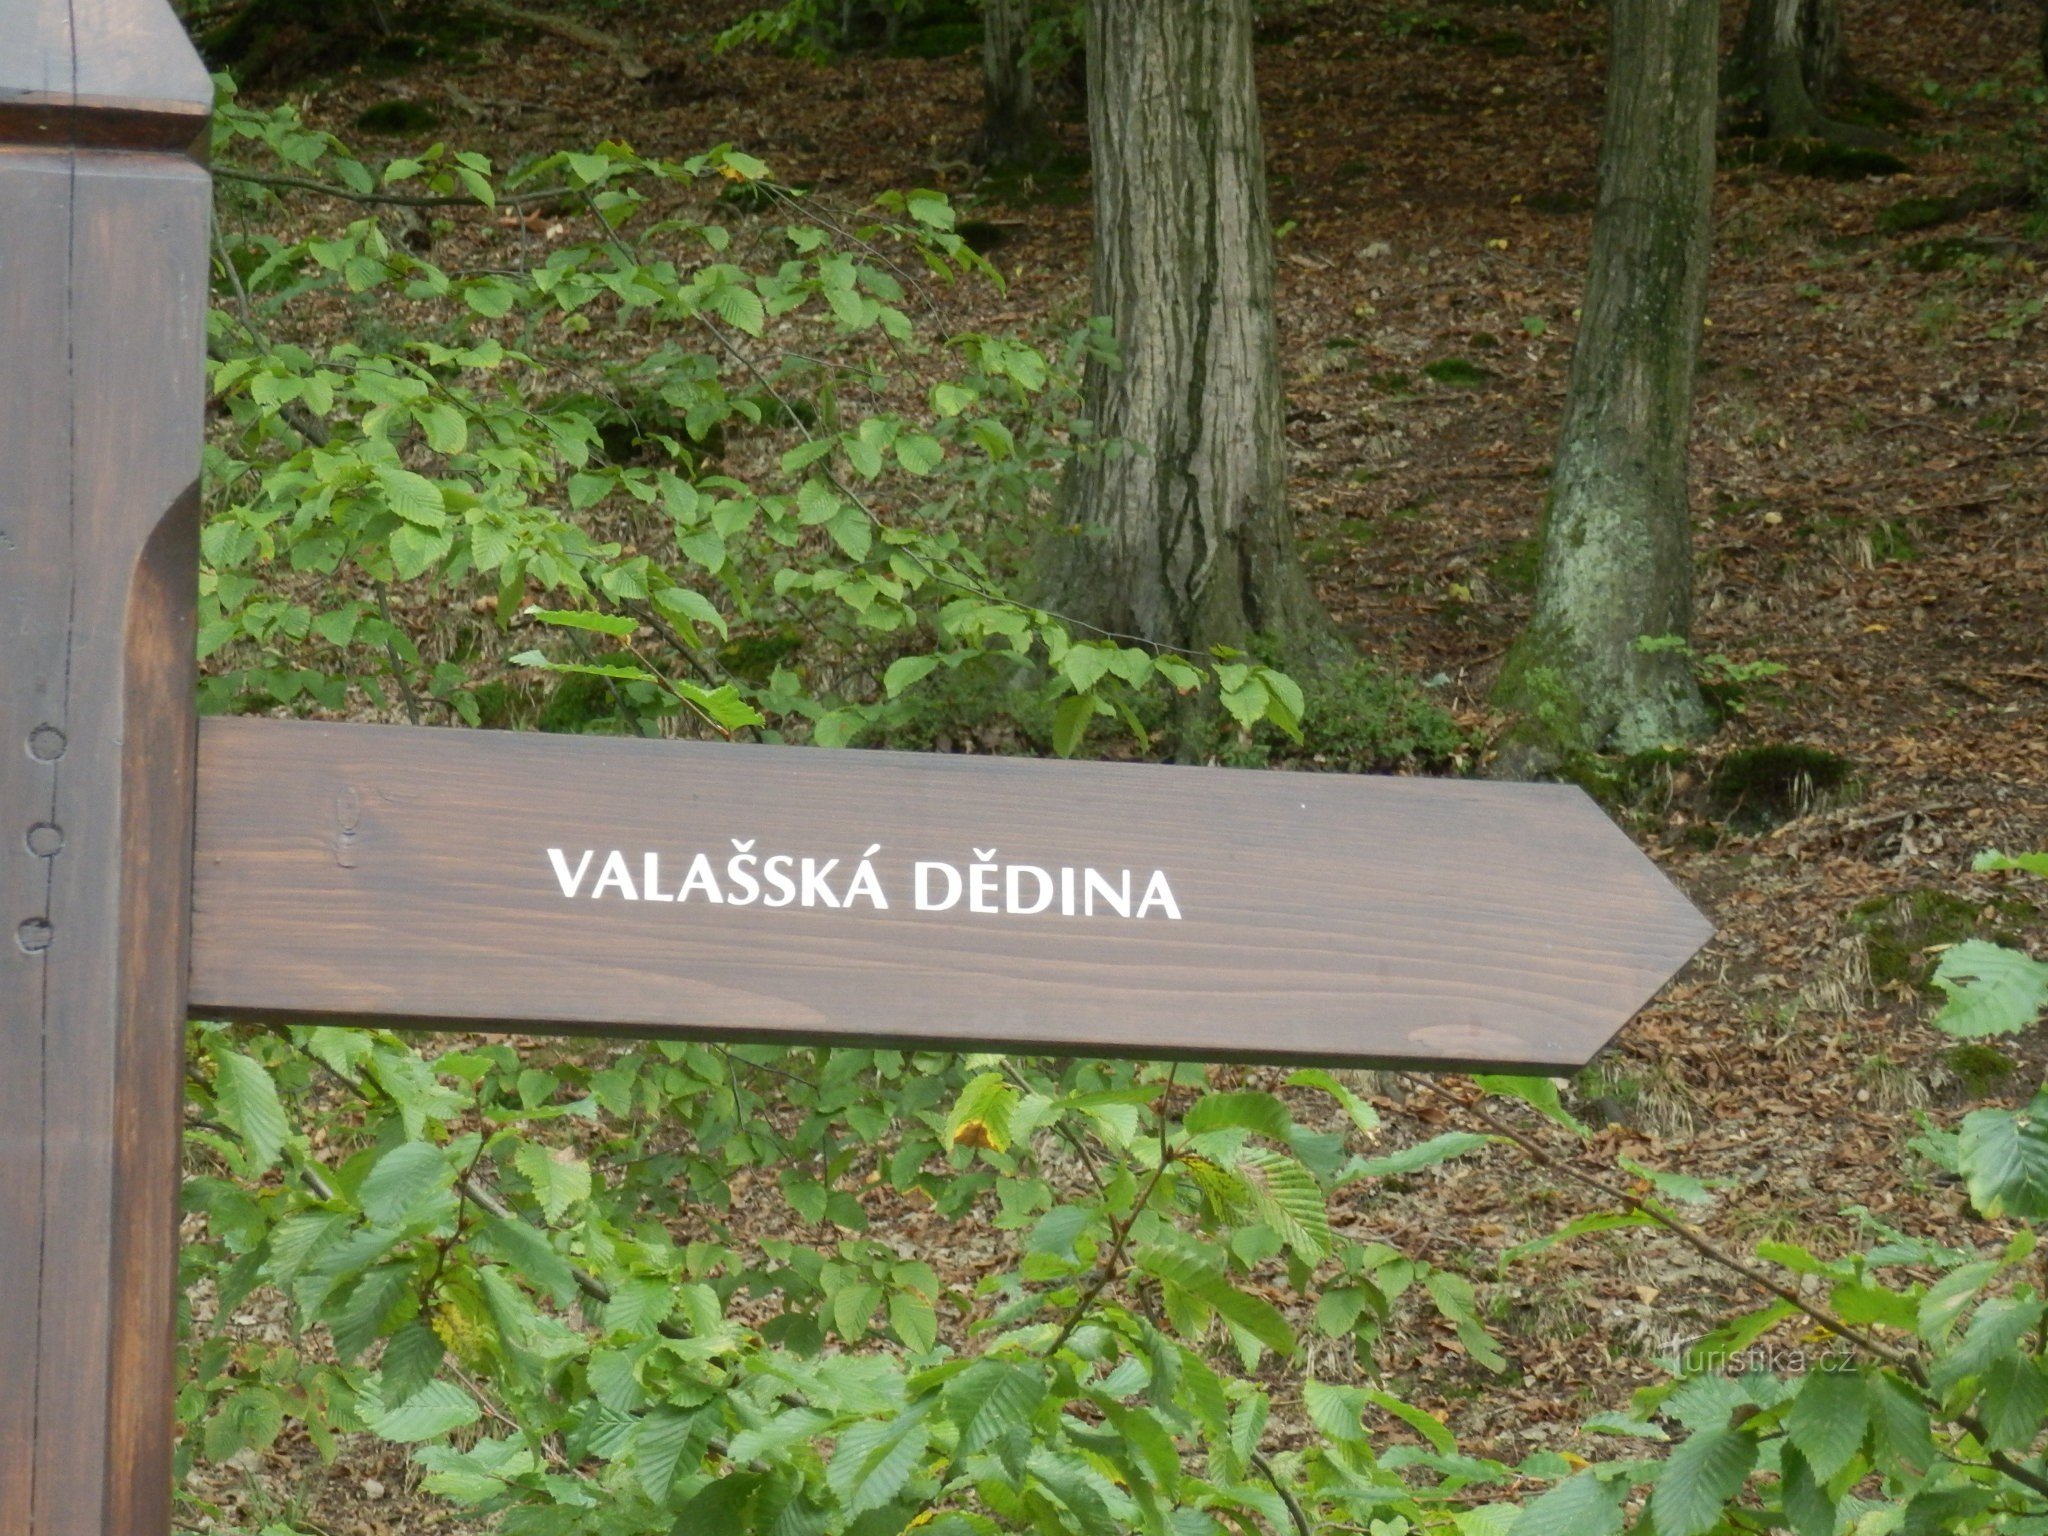 Toamna Valašská dědina - cel mai bun din muzeul în aer liber Rožnov